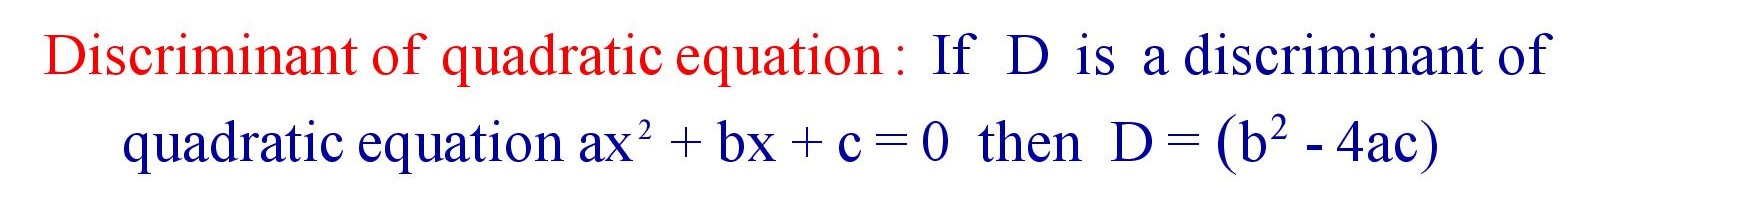 Discriminant of quadratic Equation